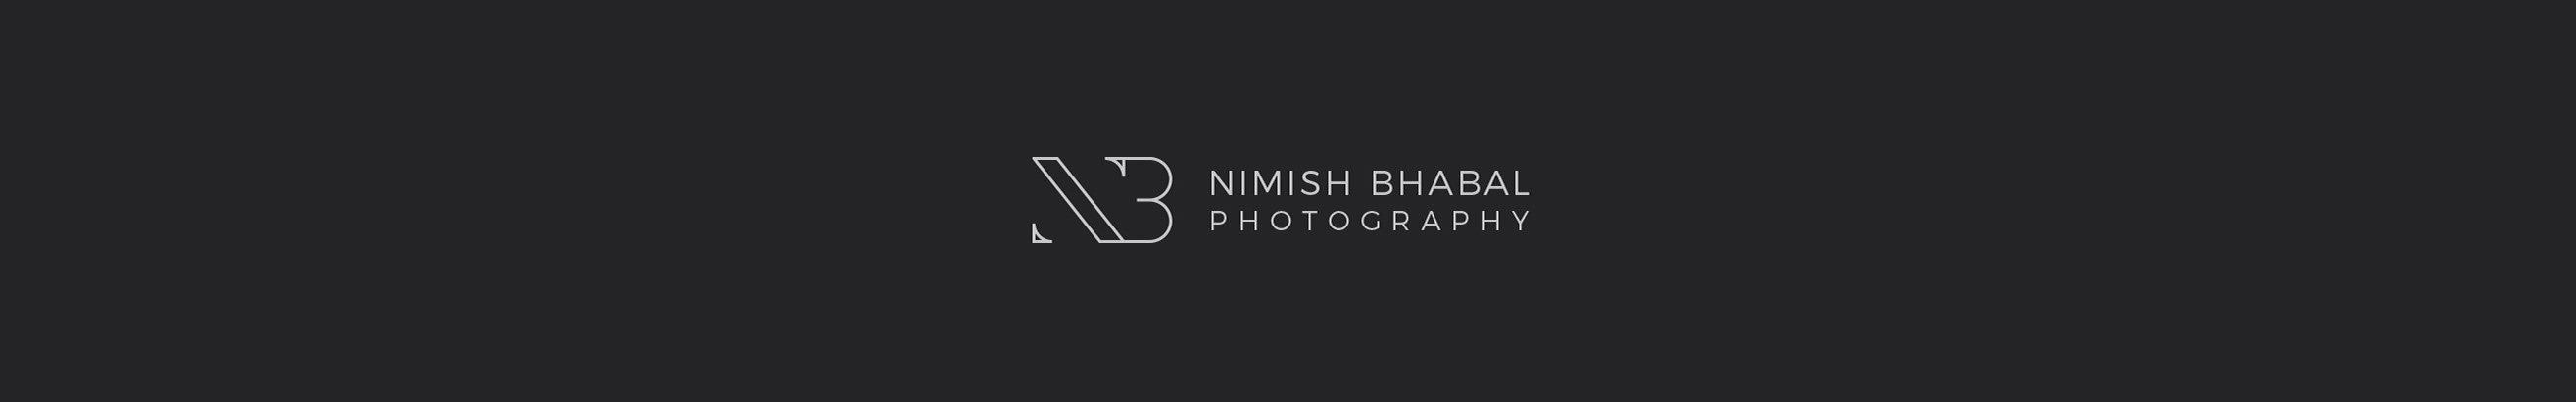 Nimish Bhabals profilbanner